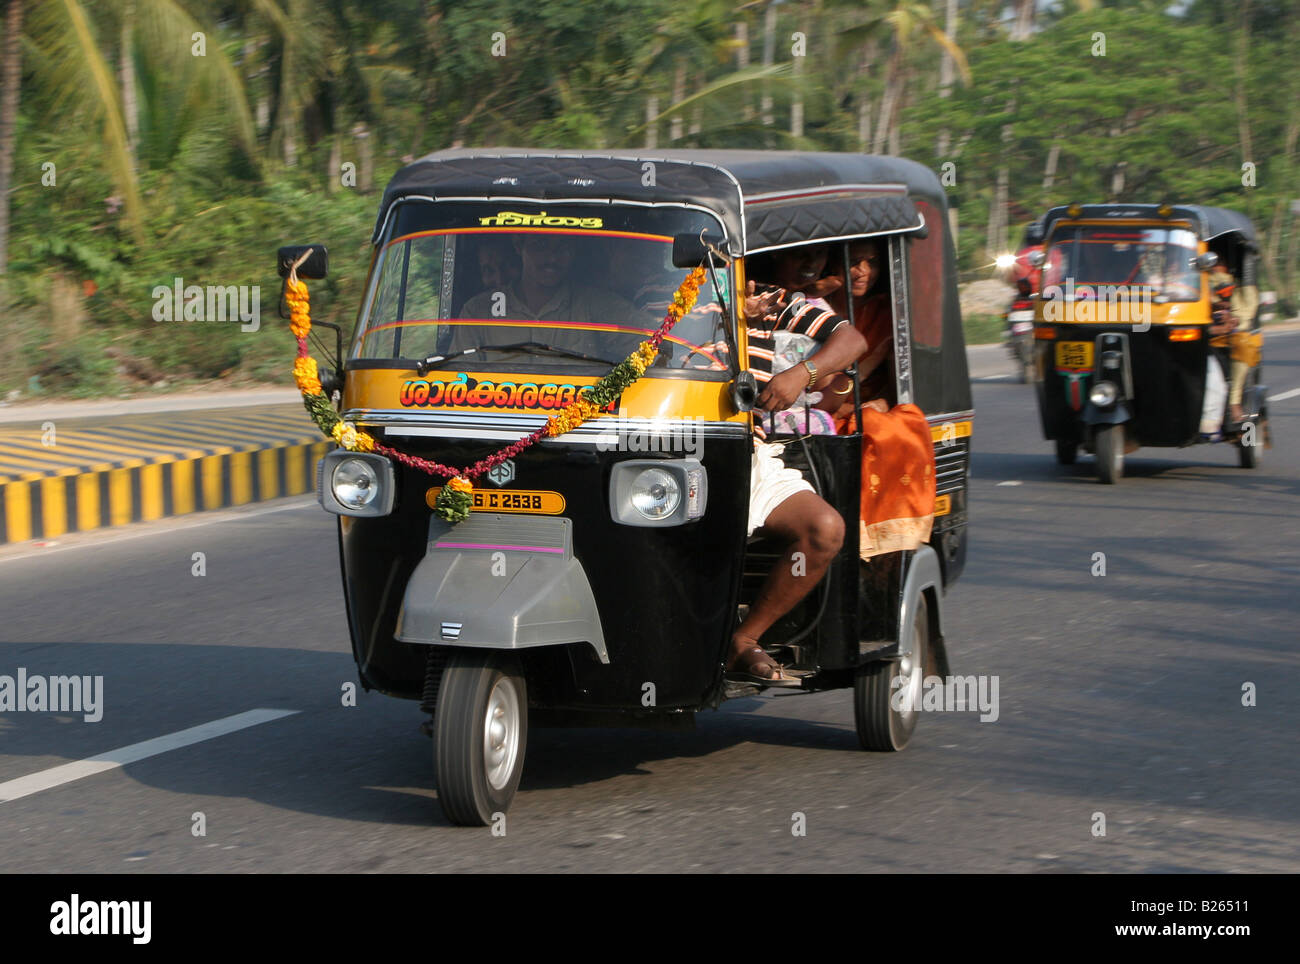 Tricycle auto rickshaw on the National Highway near Attingai Kerala India Stock Photo